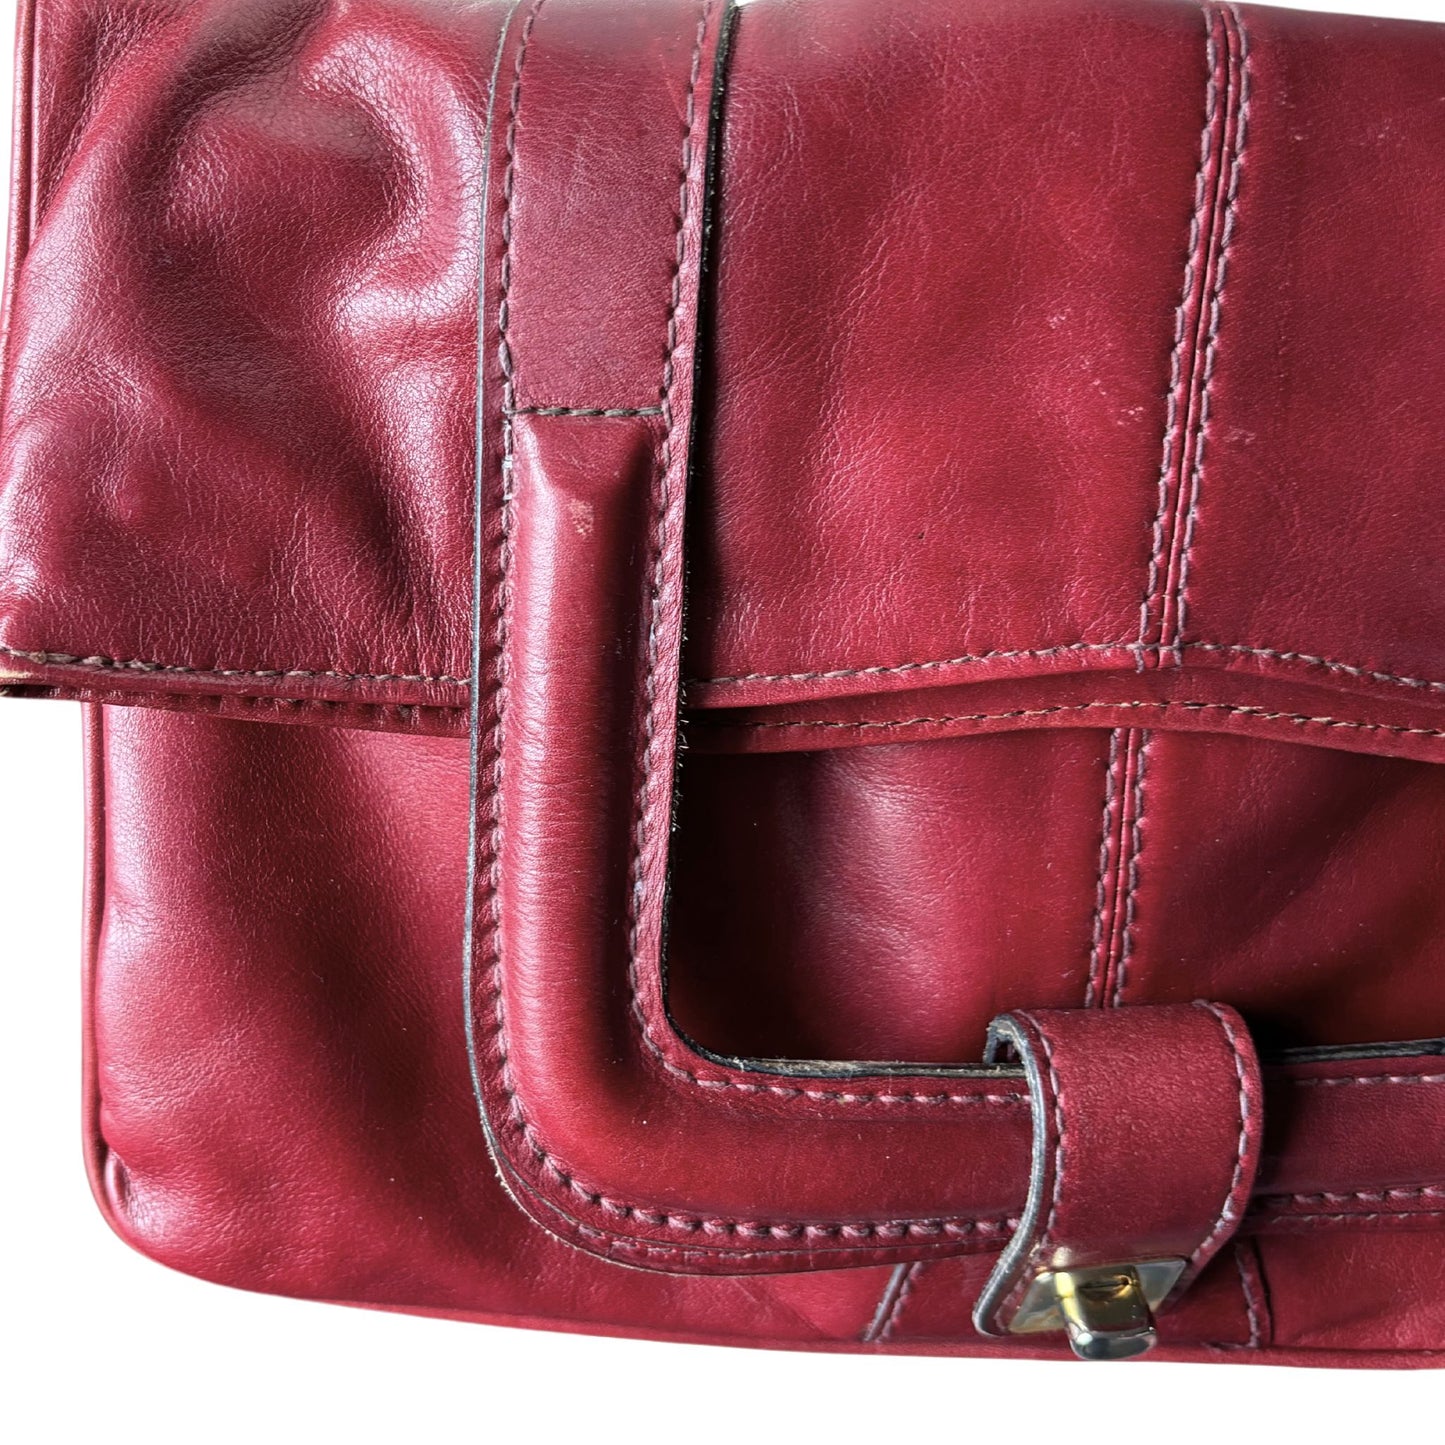 Dark Red Leather Vintage Handbag with Detachable Shoulder Strap. Stylish and Secure